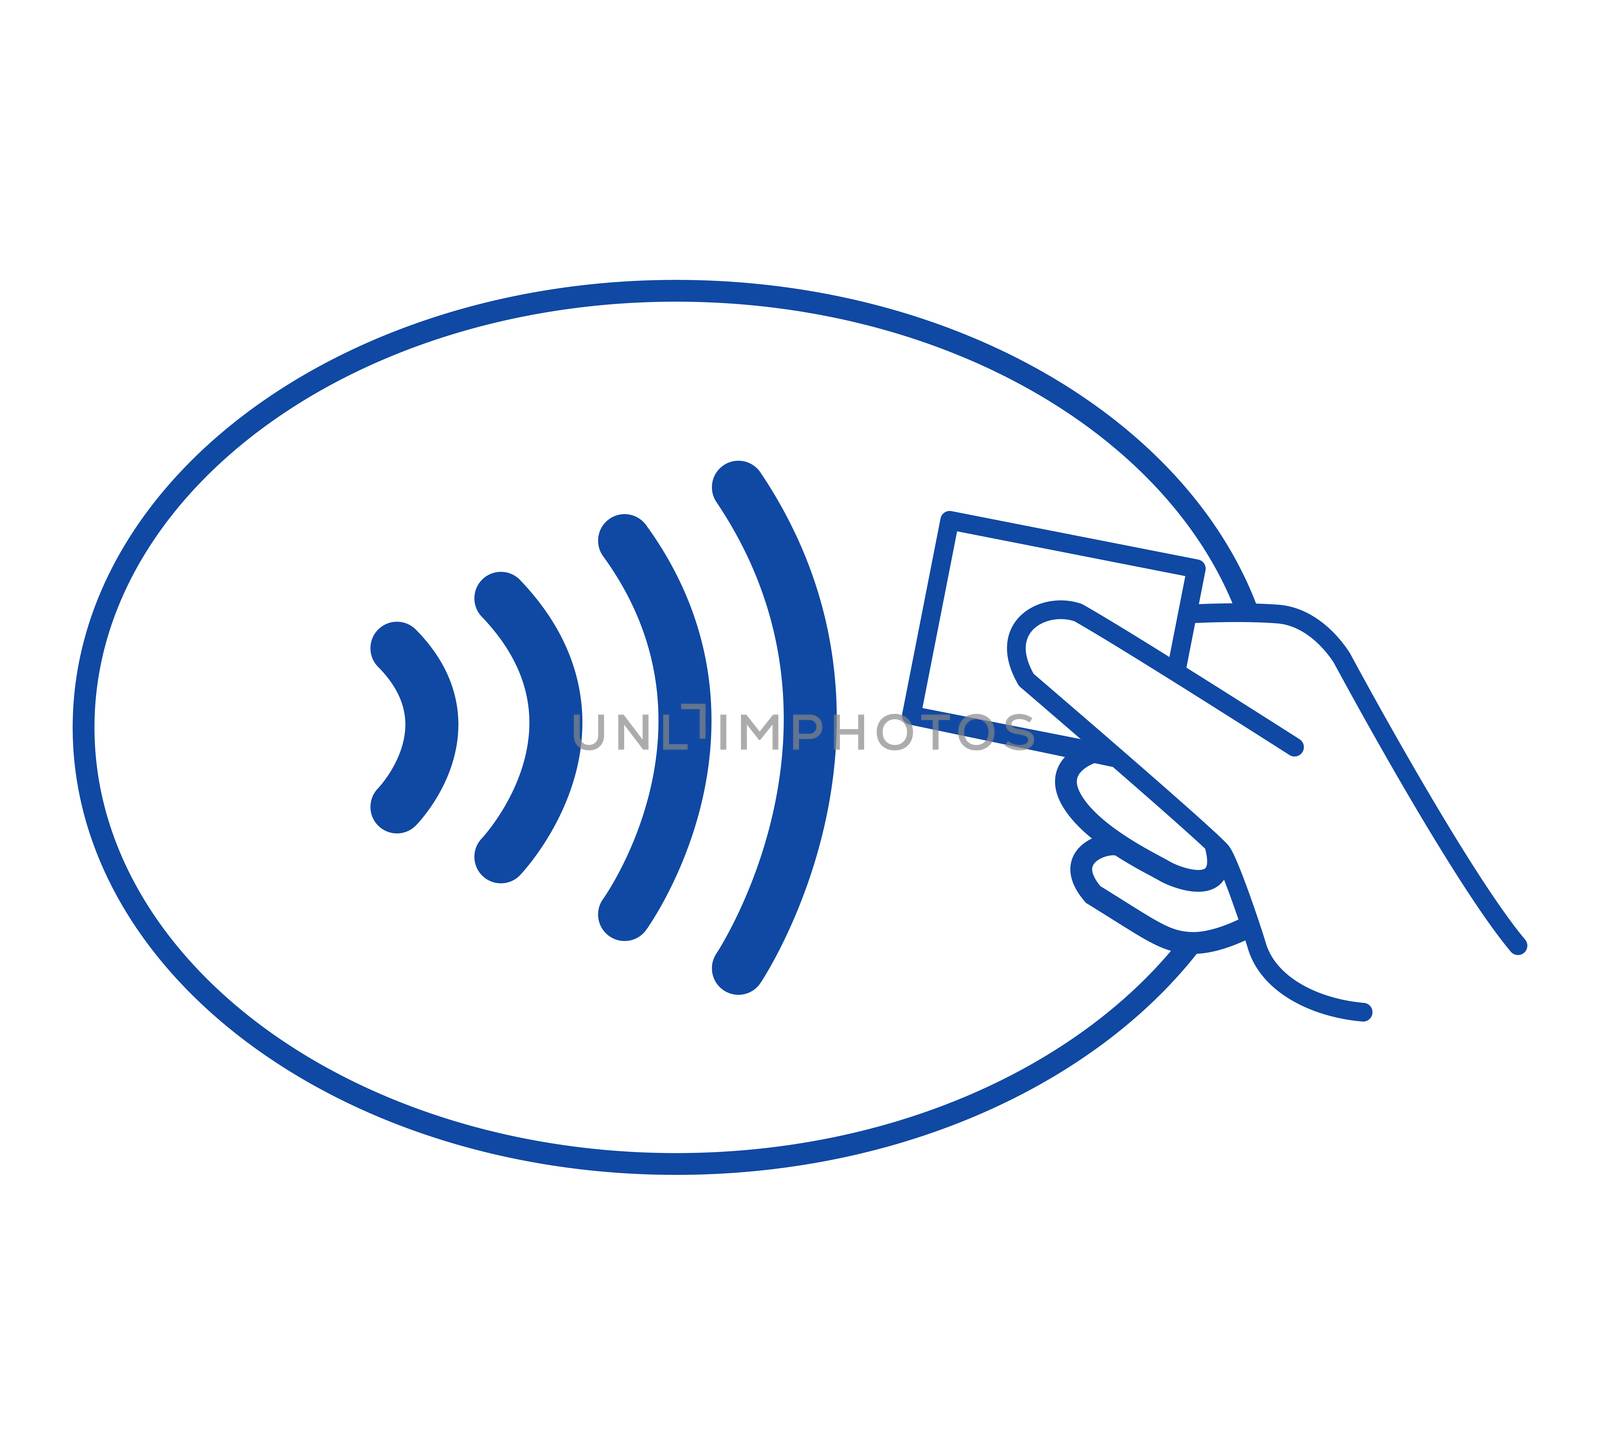 NFC - Near field communication / easy pay by aa-w